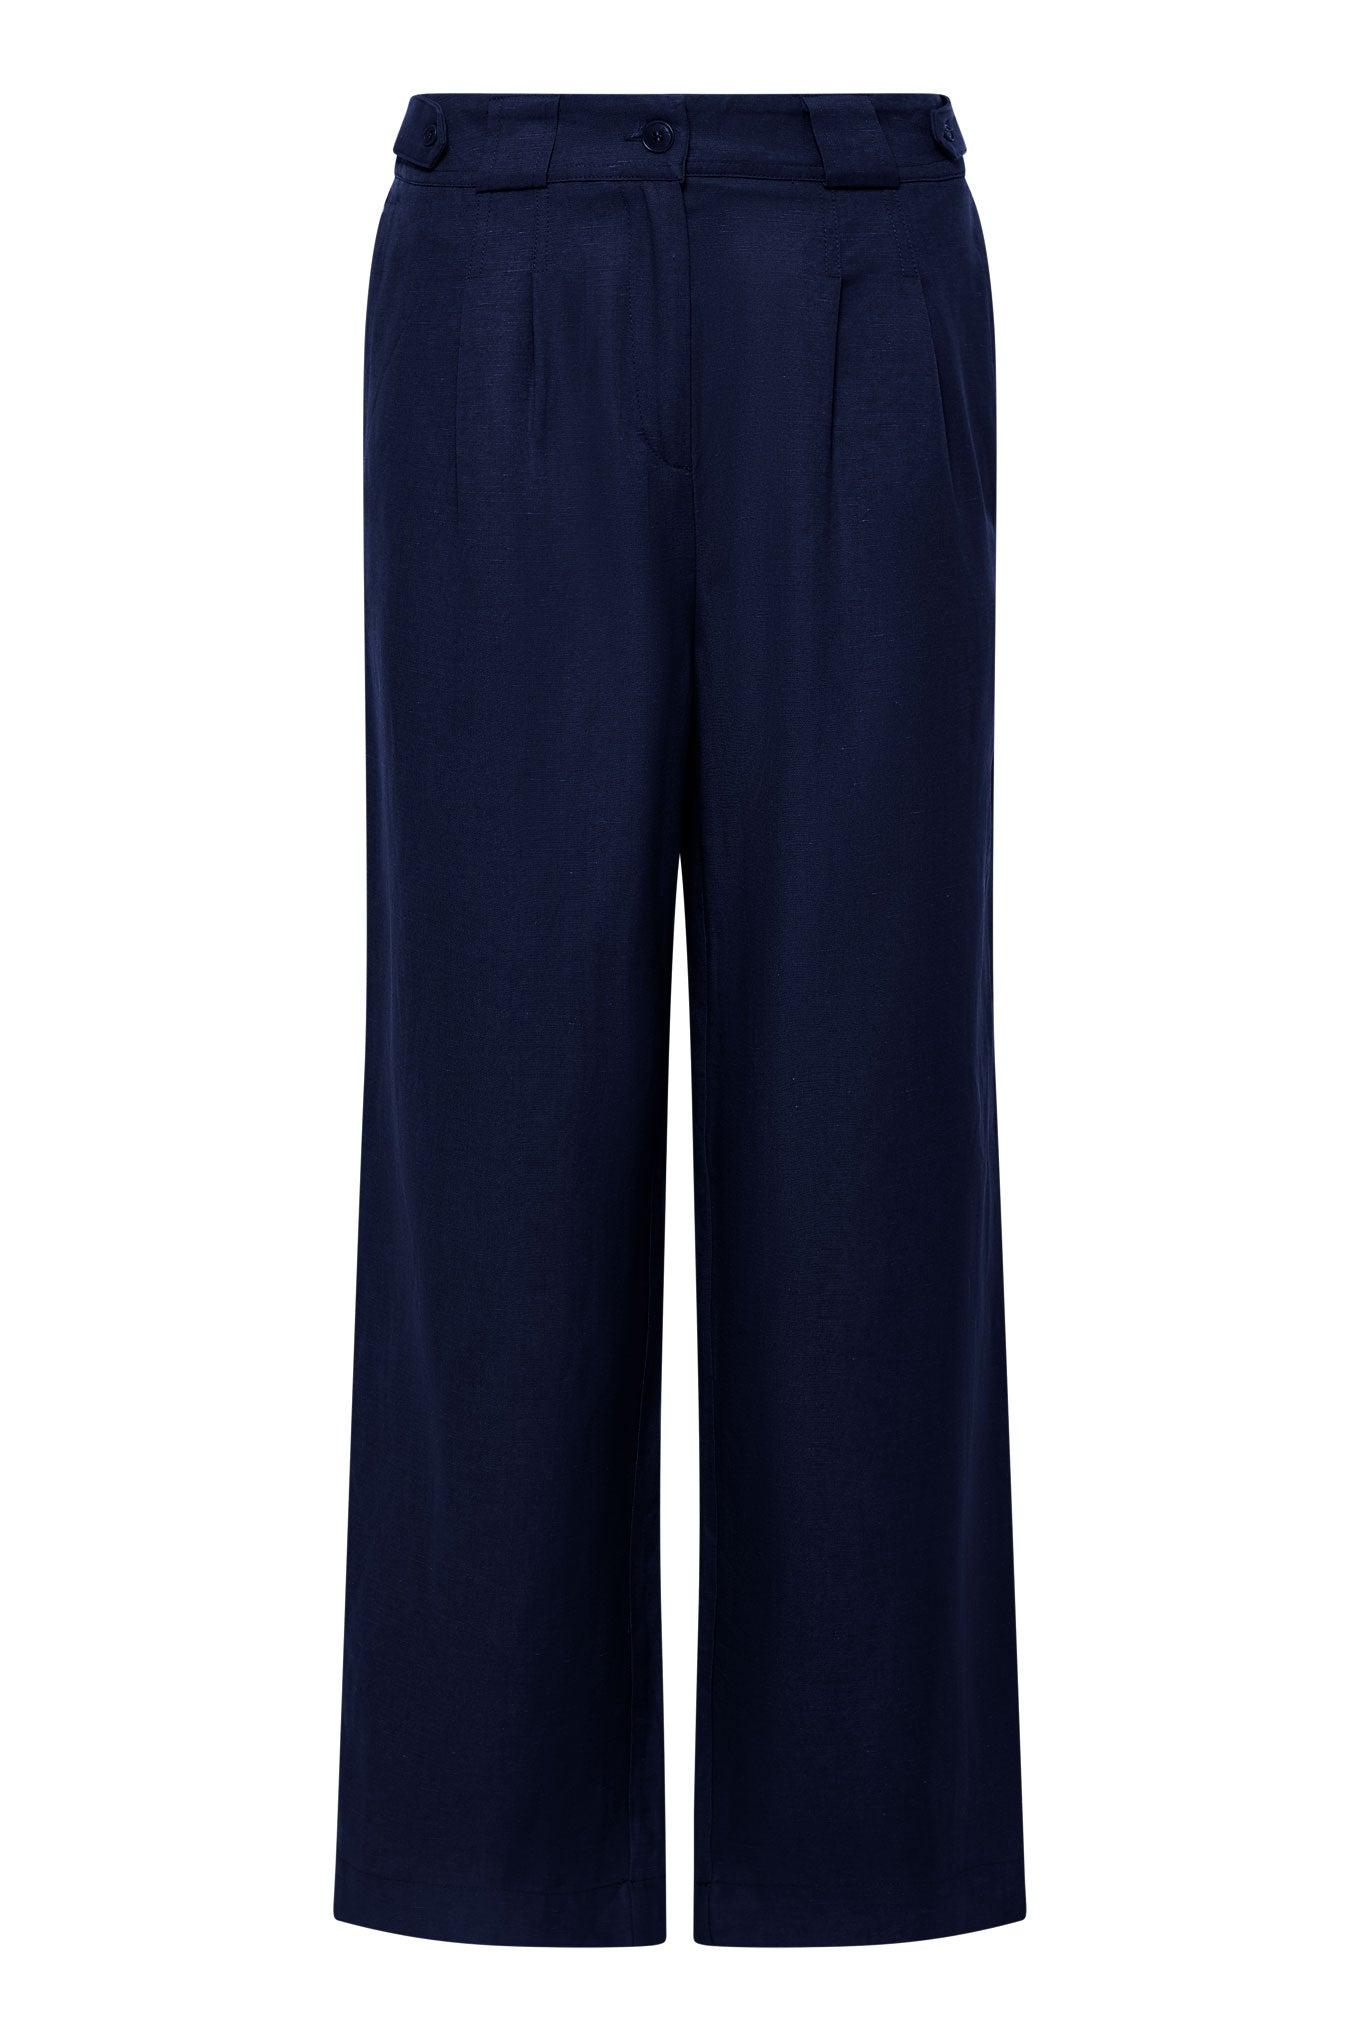 MIRA - Tencel Linen Trouser Navy